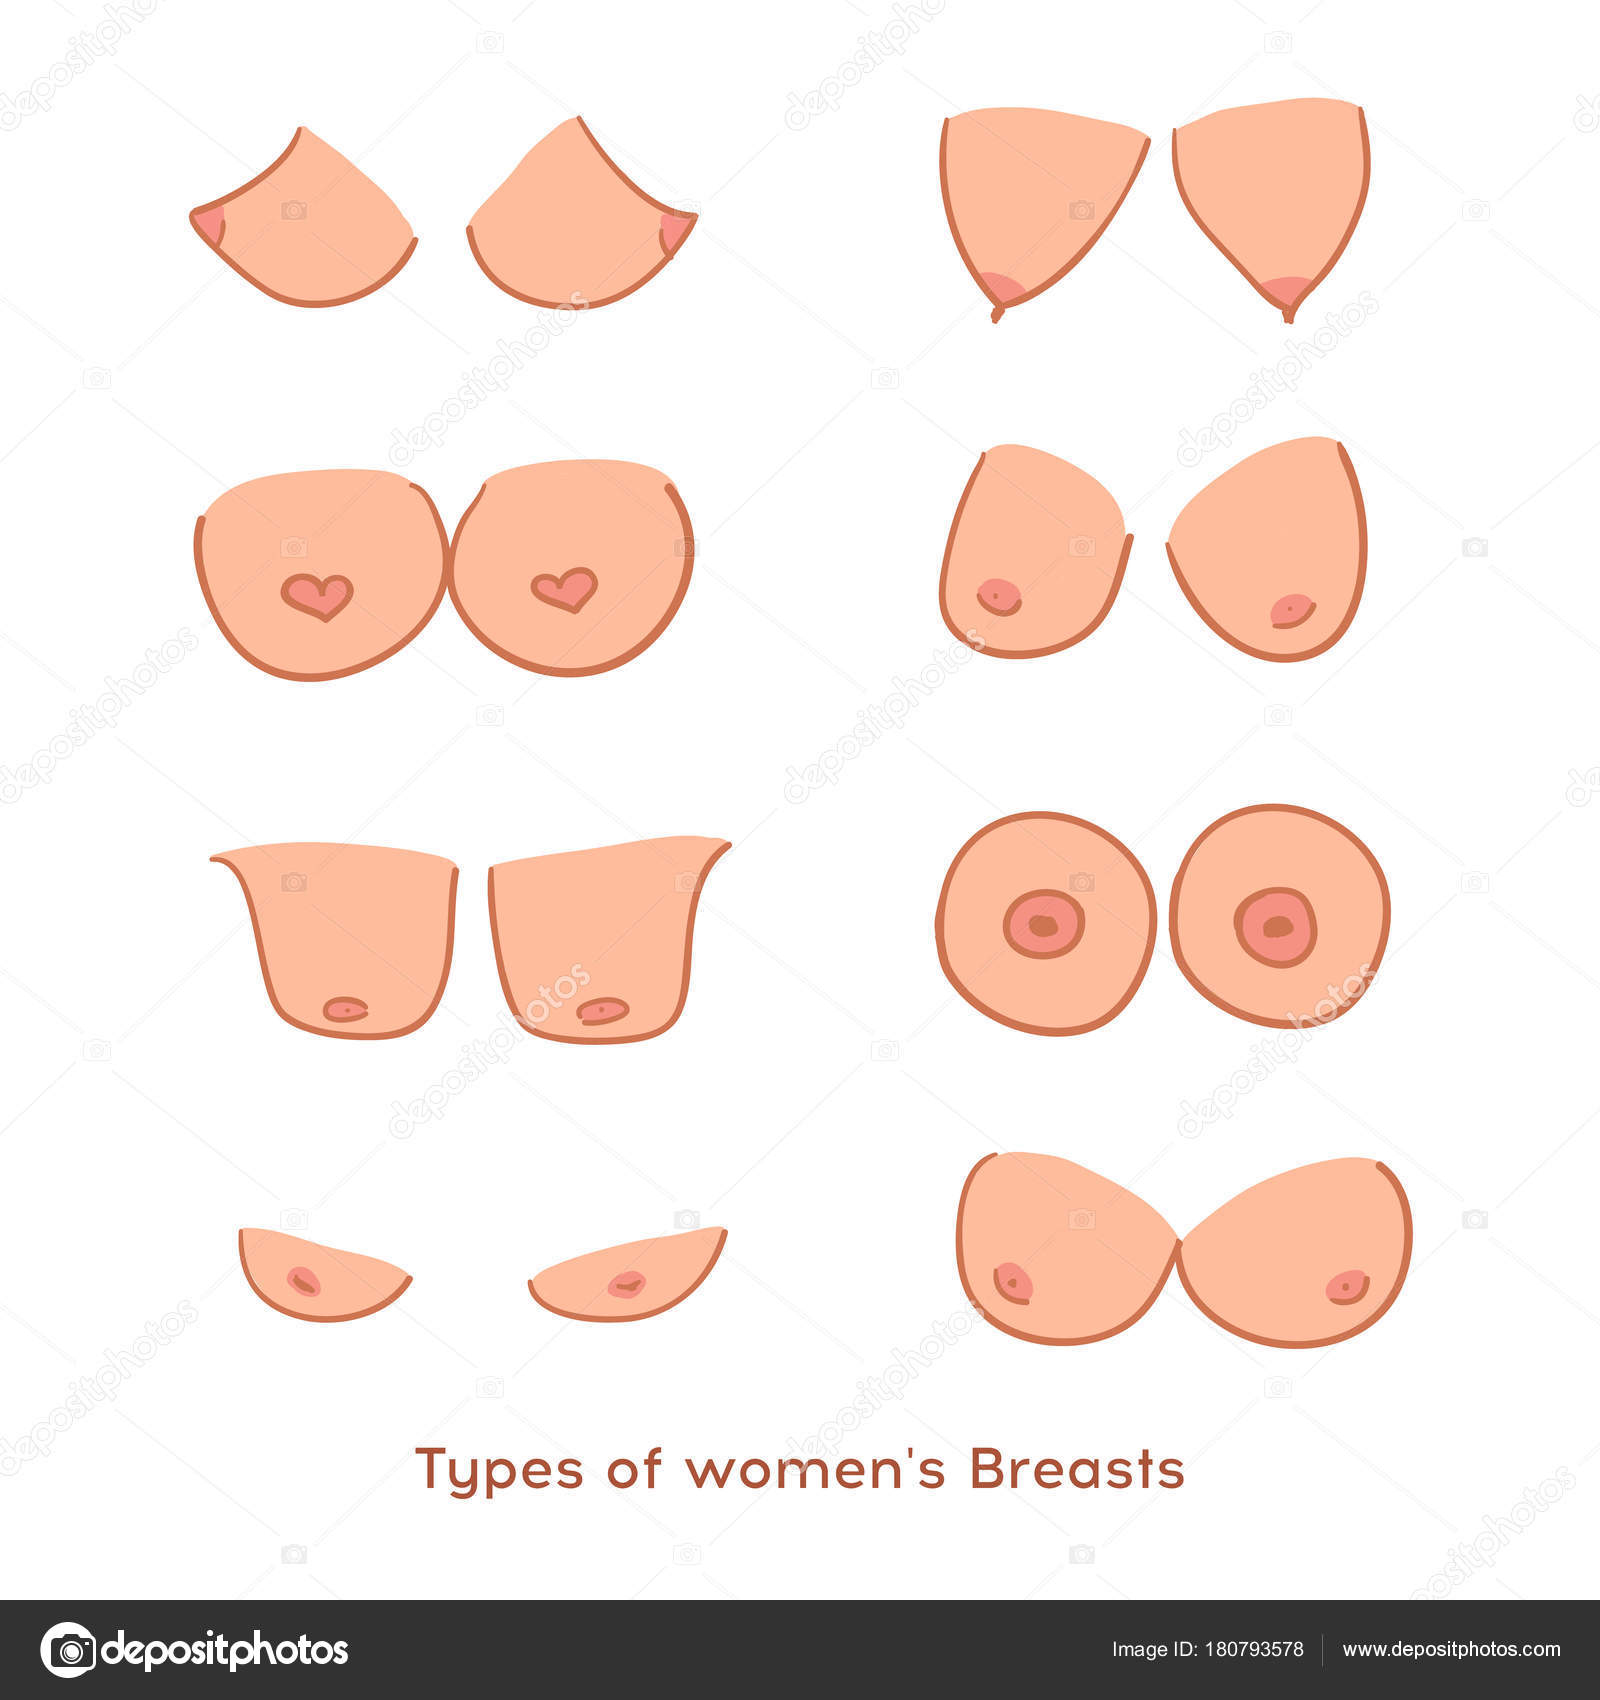 https://st3.depositphotos.com/5823730/18079/v/1600/depositphotos_180793578-stock-illustration-types-women-breasts-women-breast.jpg